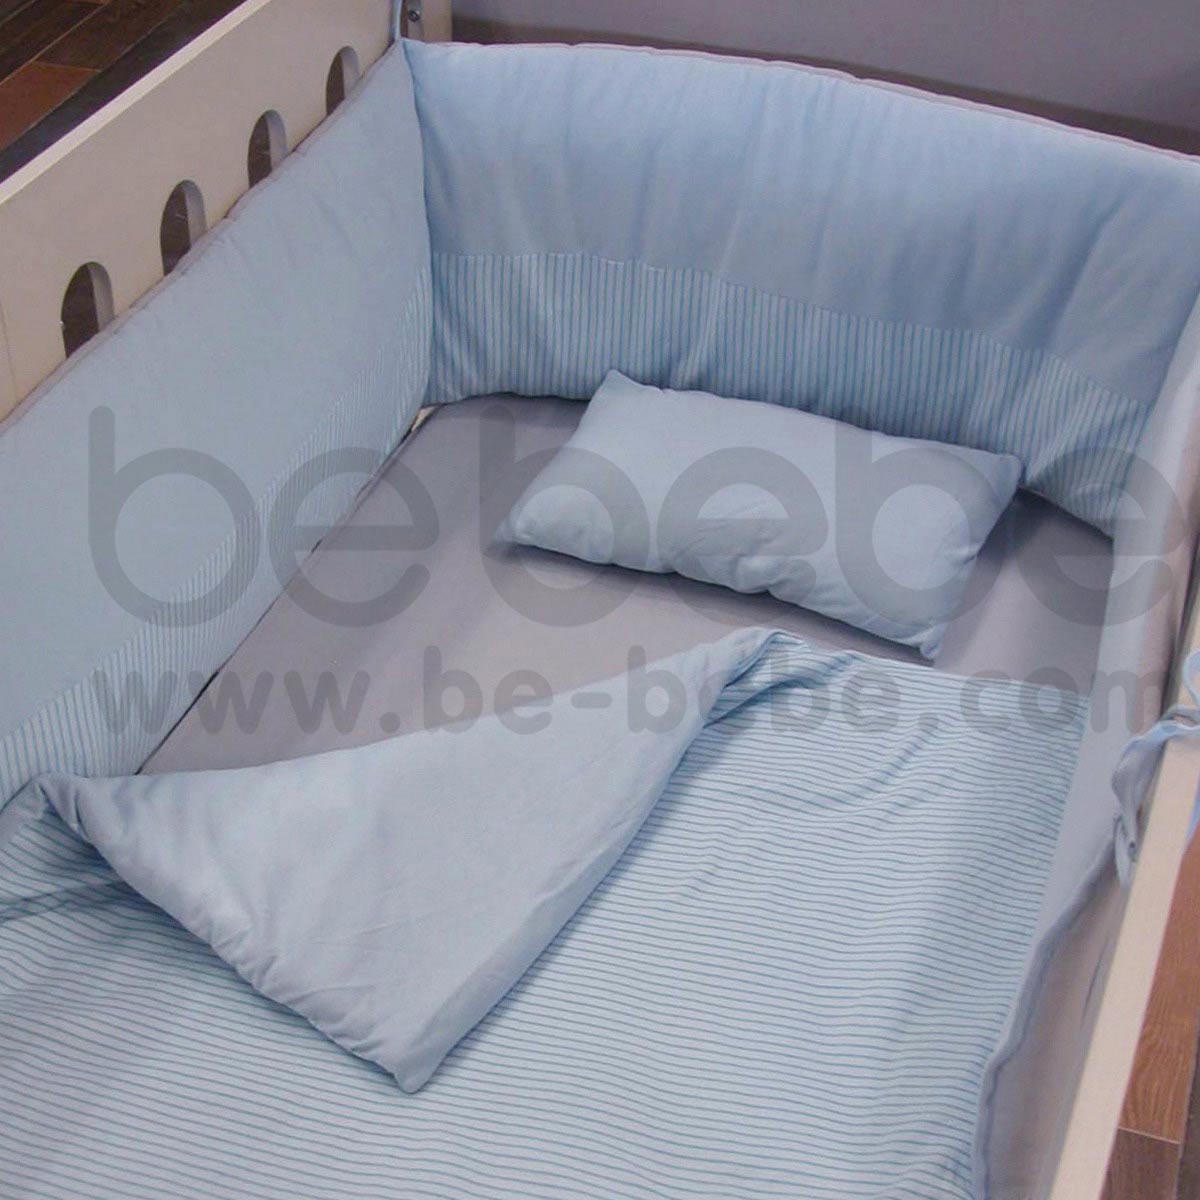 be bebe:Bedding Set 70x140 (5 Pcs.)/Blue